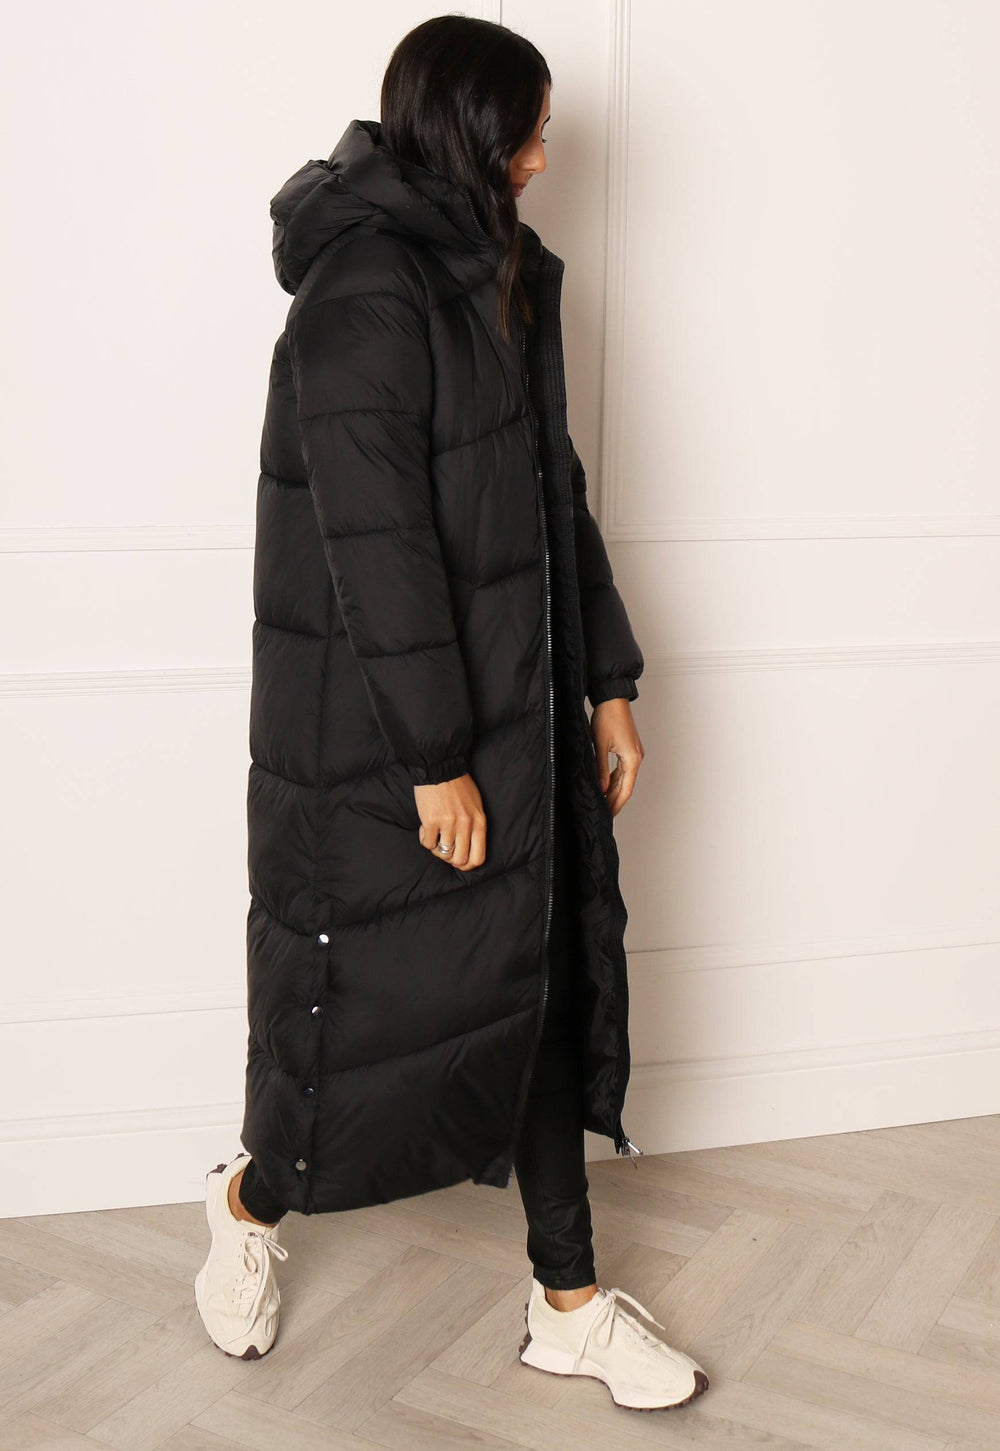 VERO MODA Sala Midi Longline Hooded Puffer Coat in Black | One Nation Clothing VERO MODA Sala Longline Hooded Puffer Coat in Black